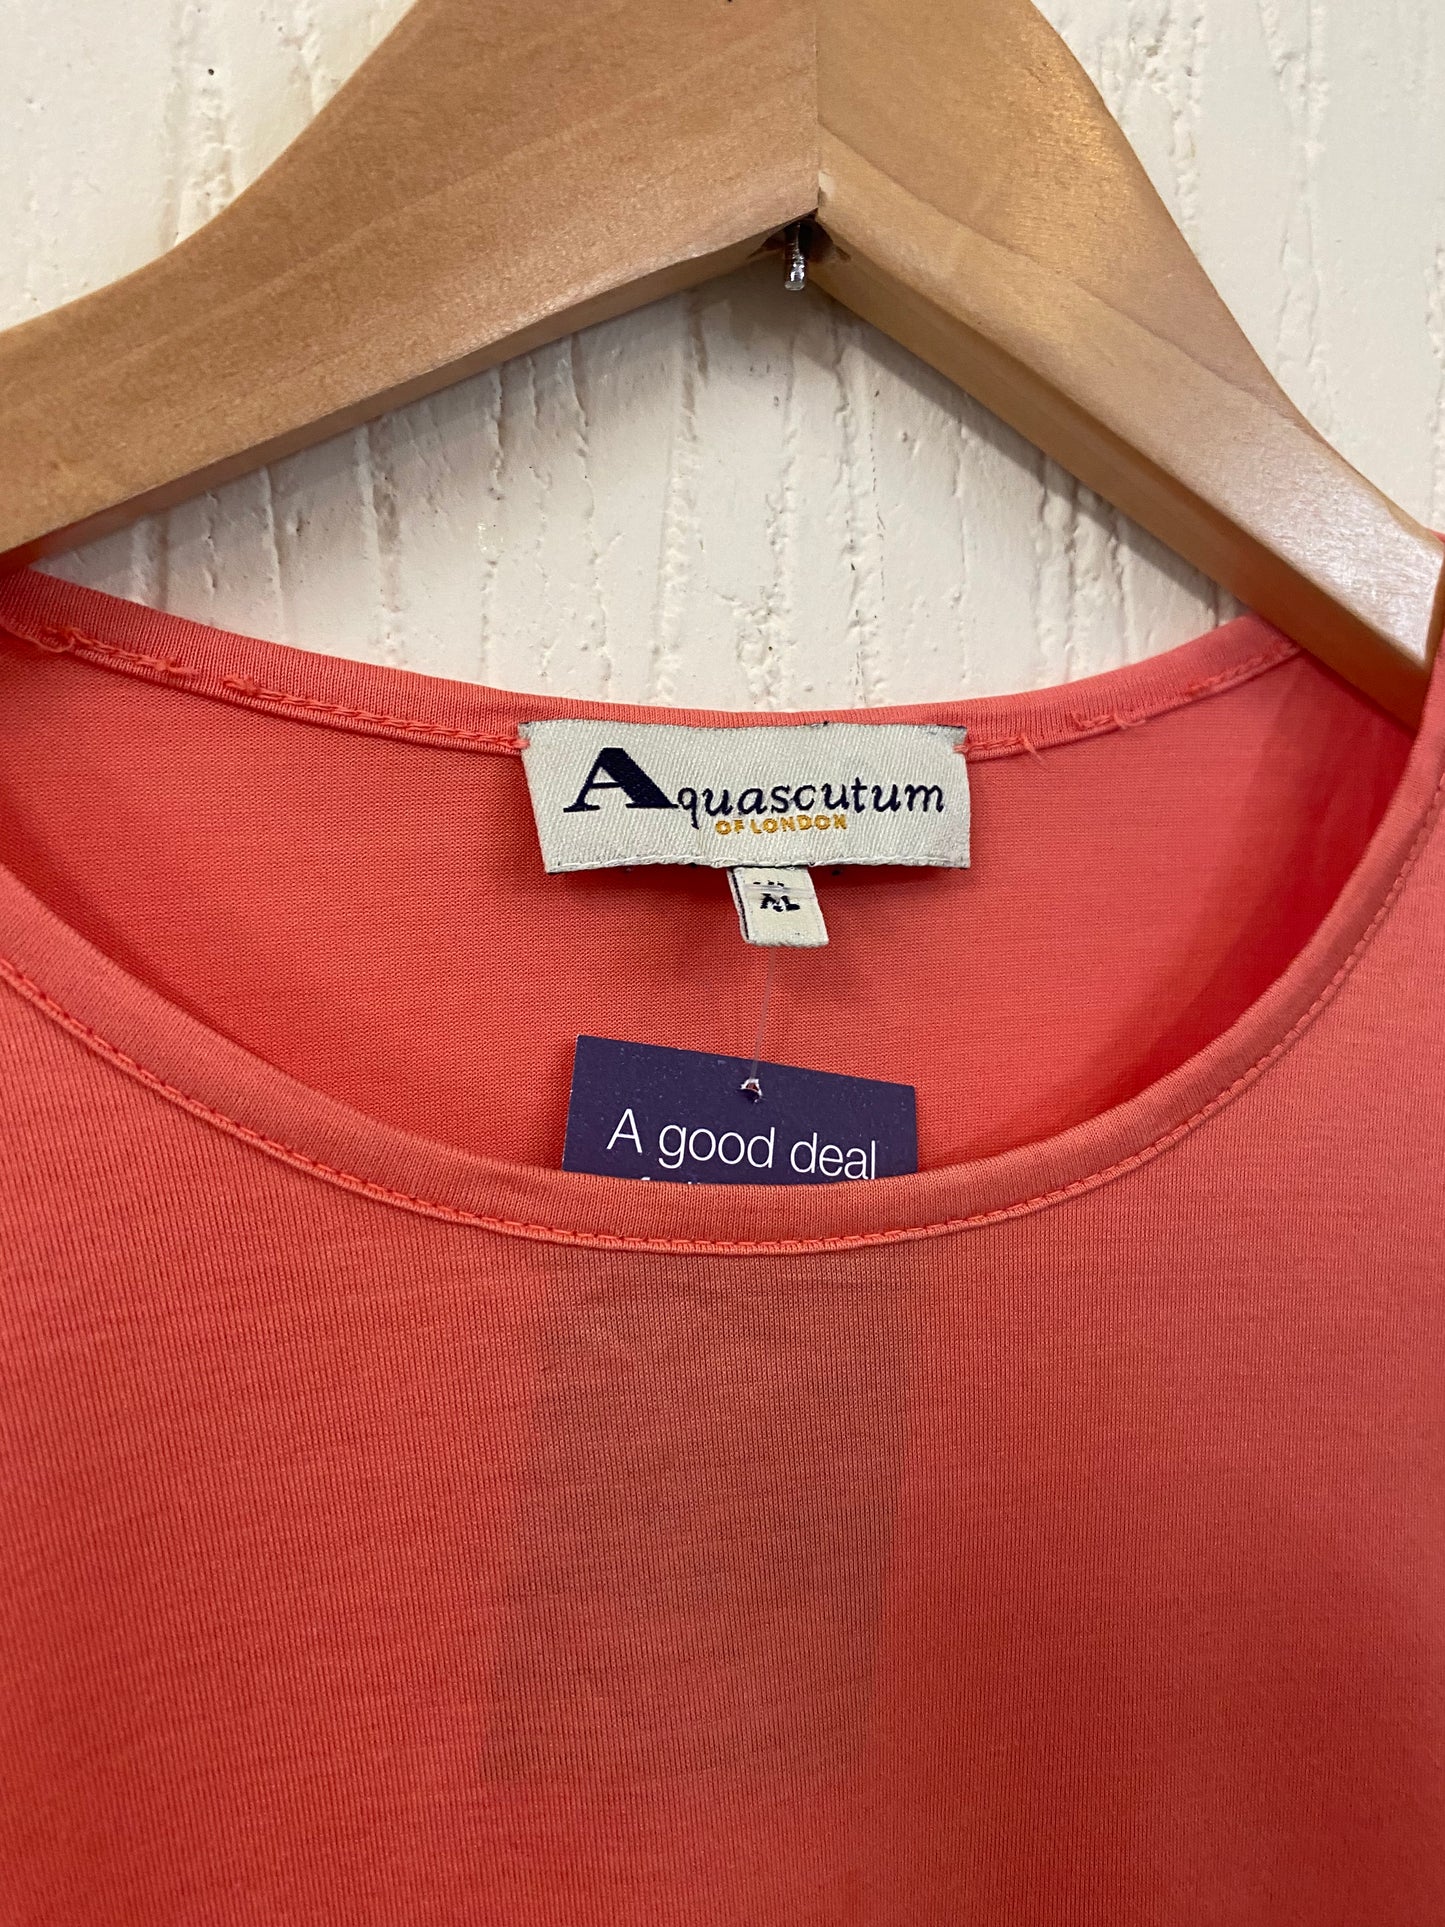 Vintage Aquascutum Coral T-Shirt  Size 14